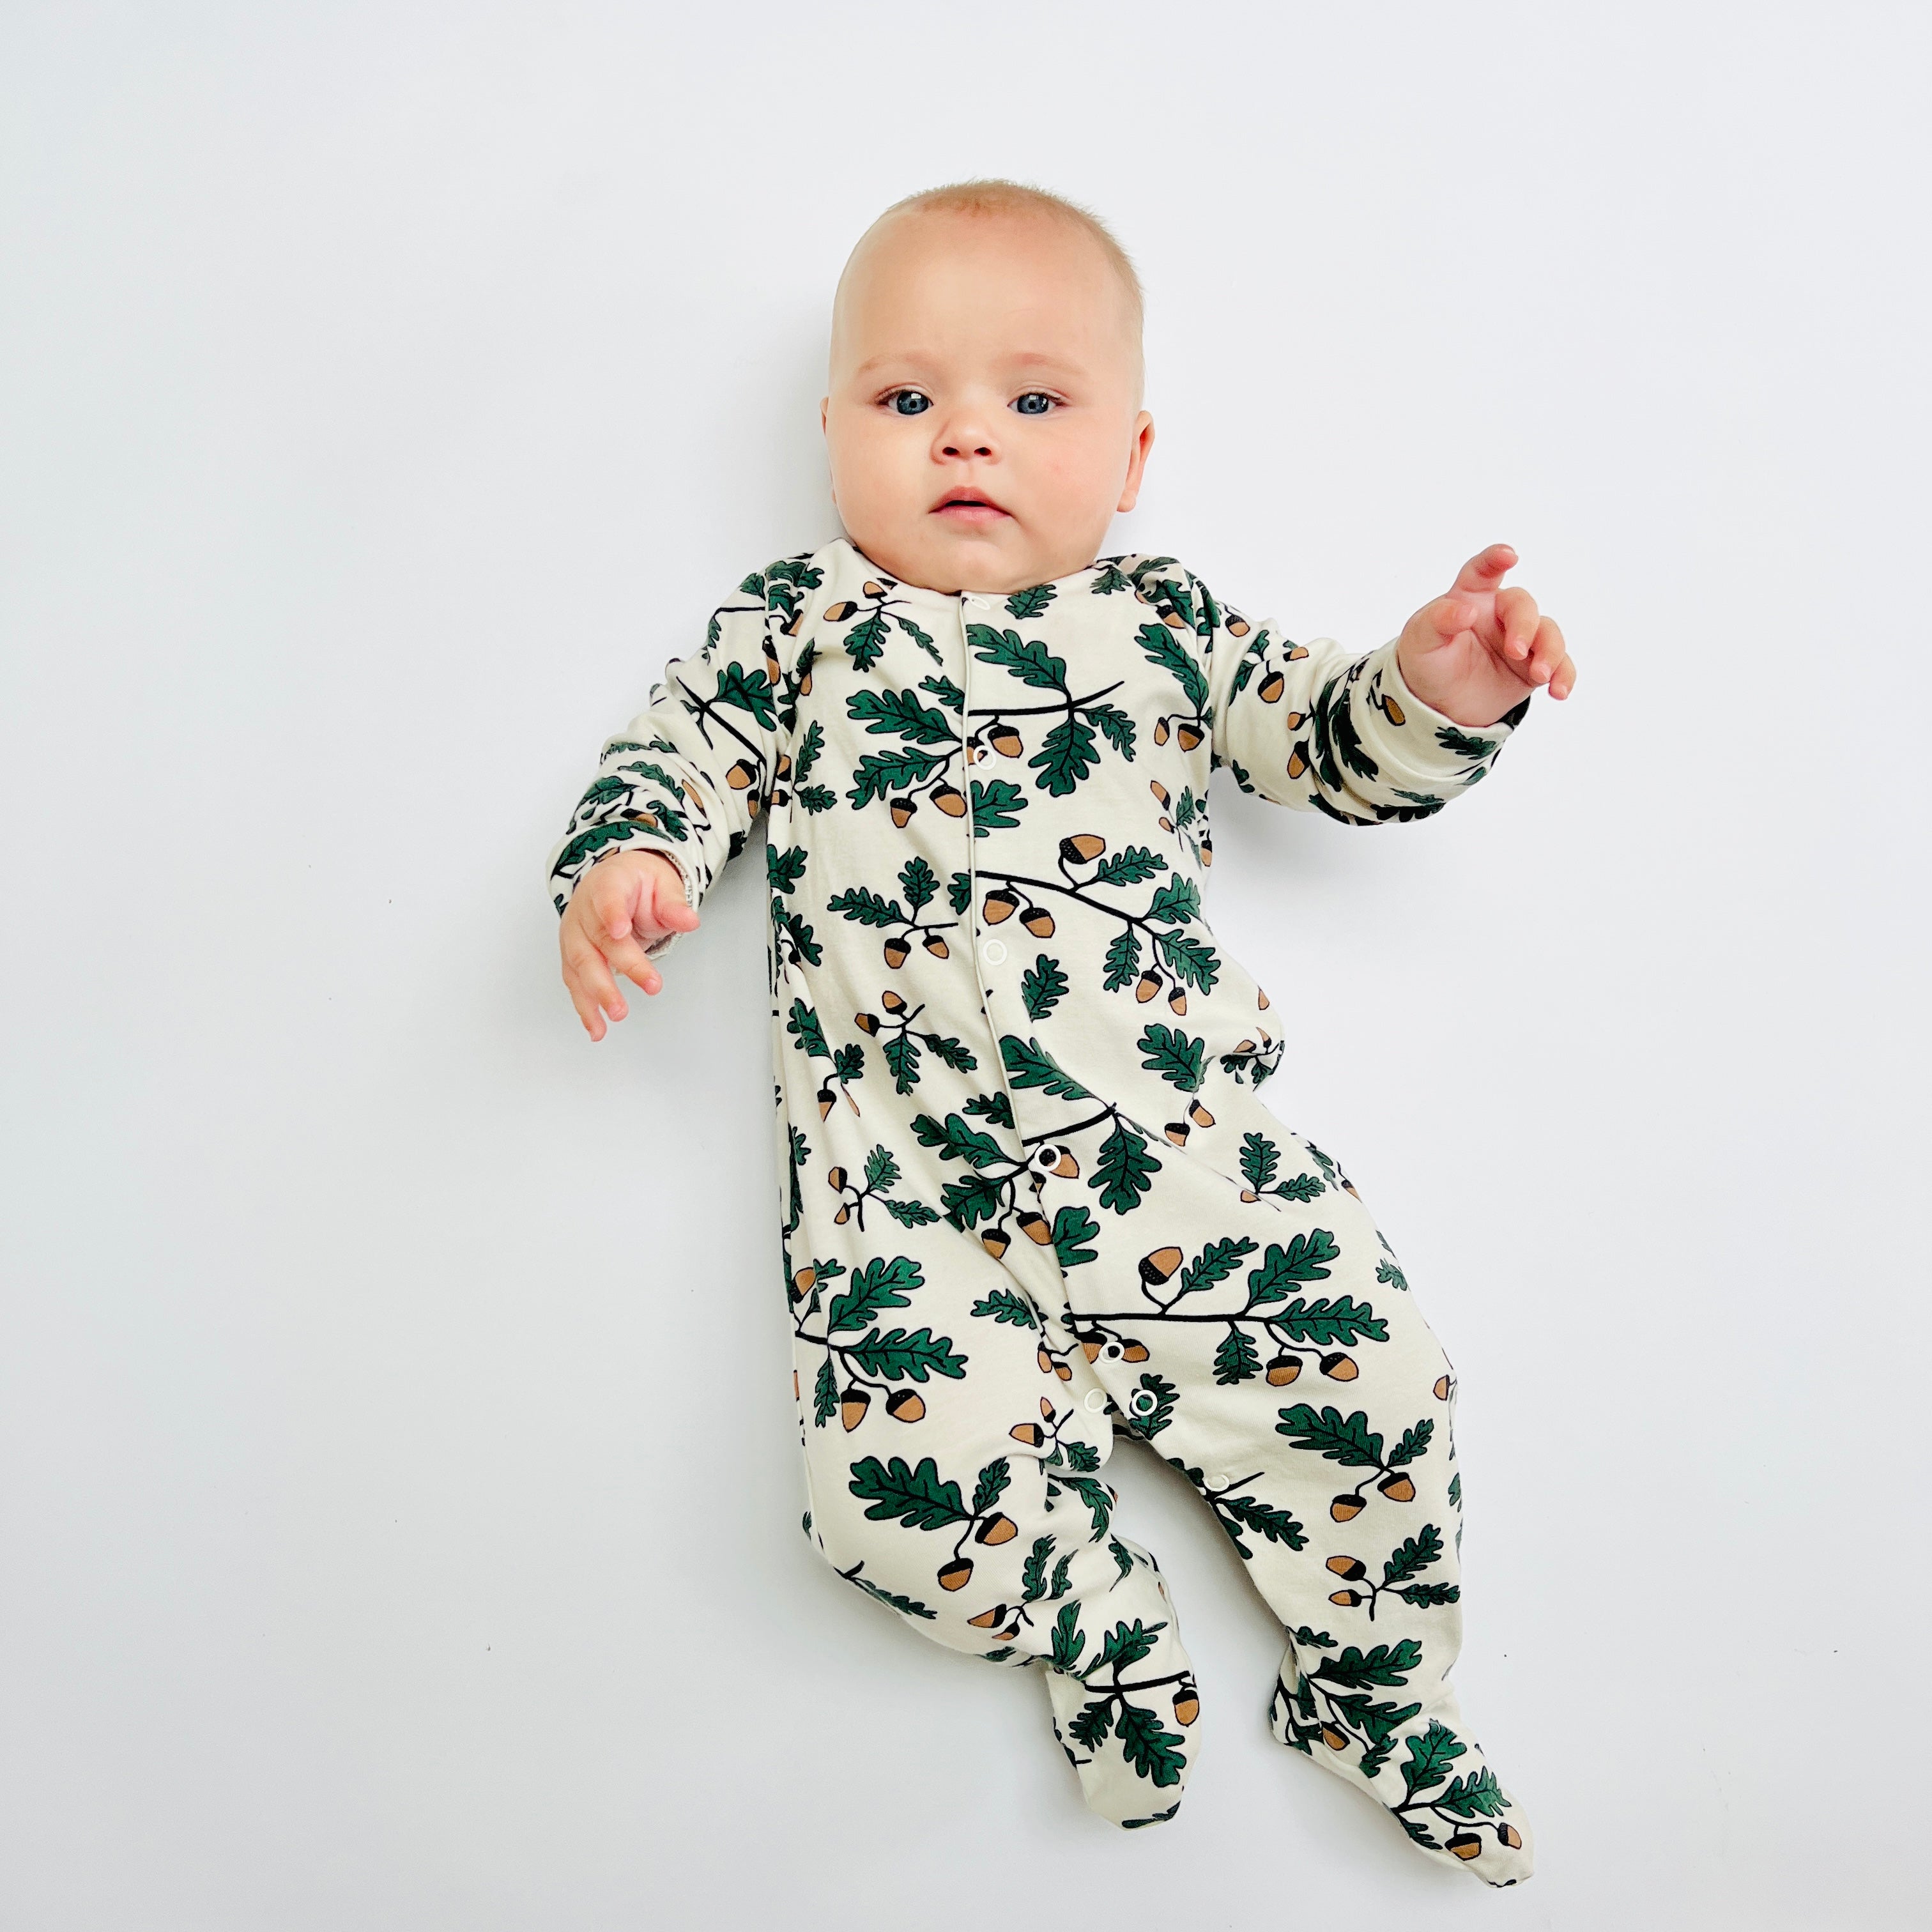 Eddie & Bee organic cotton Baby sleep suit  in Oat " Little acorn " print.